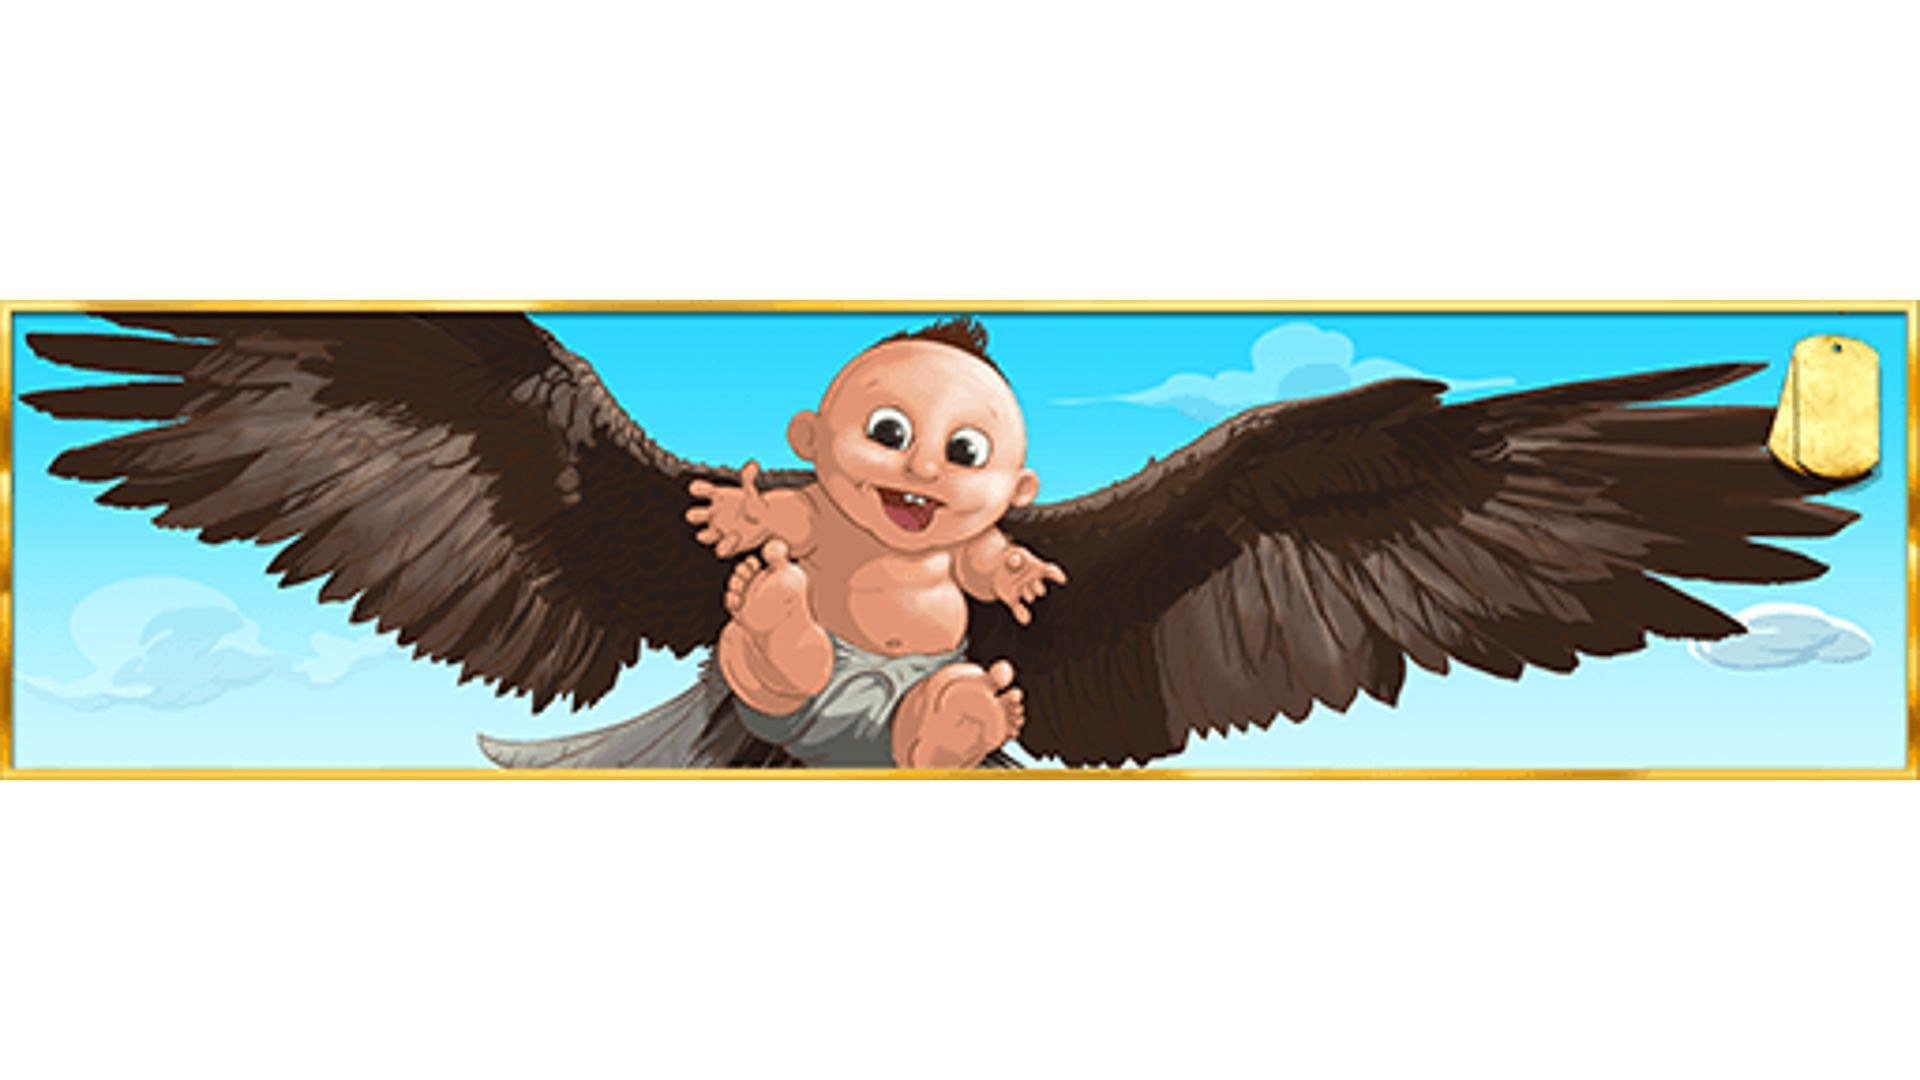 The &quot;Eagle Child!&quot; Calling Card reward (Image via Activision)